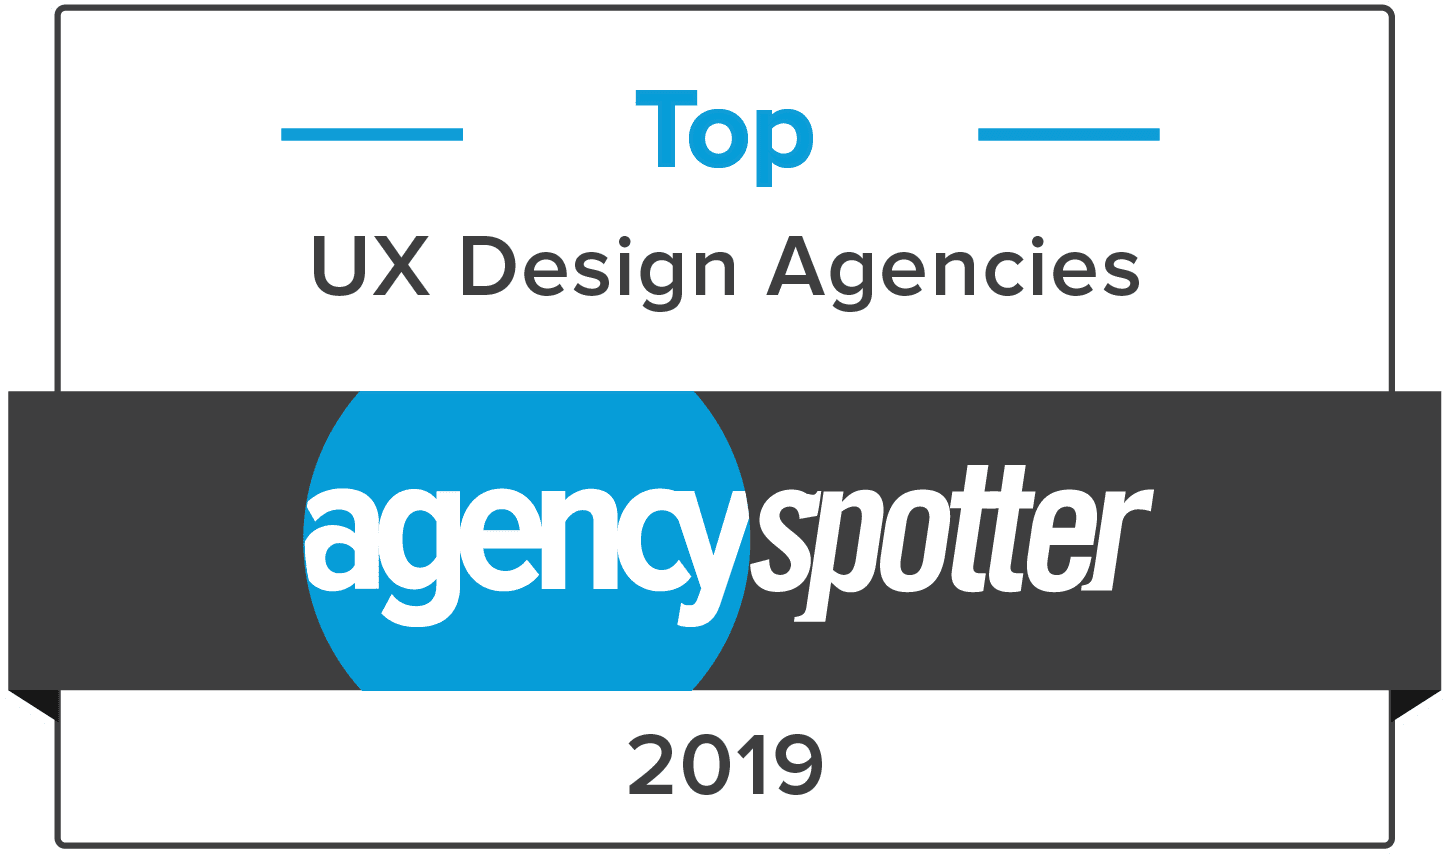 Agencyspotter-Top UX design agencies 2019-Digital Order Technology